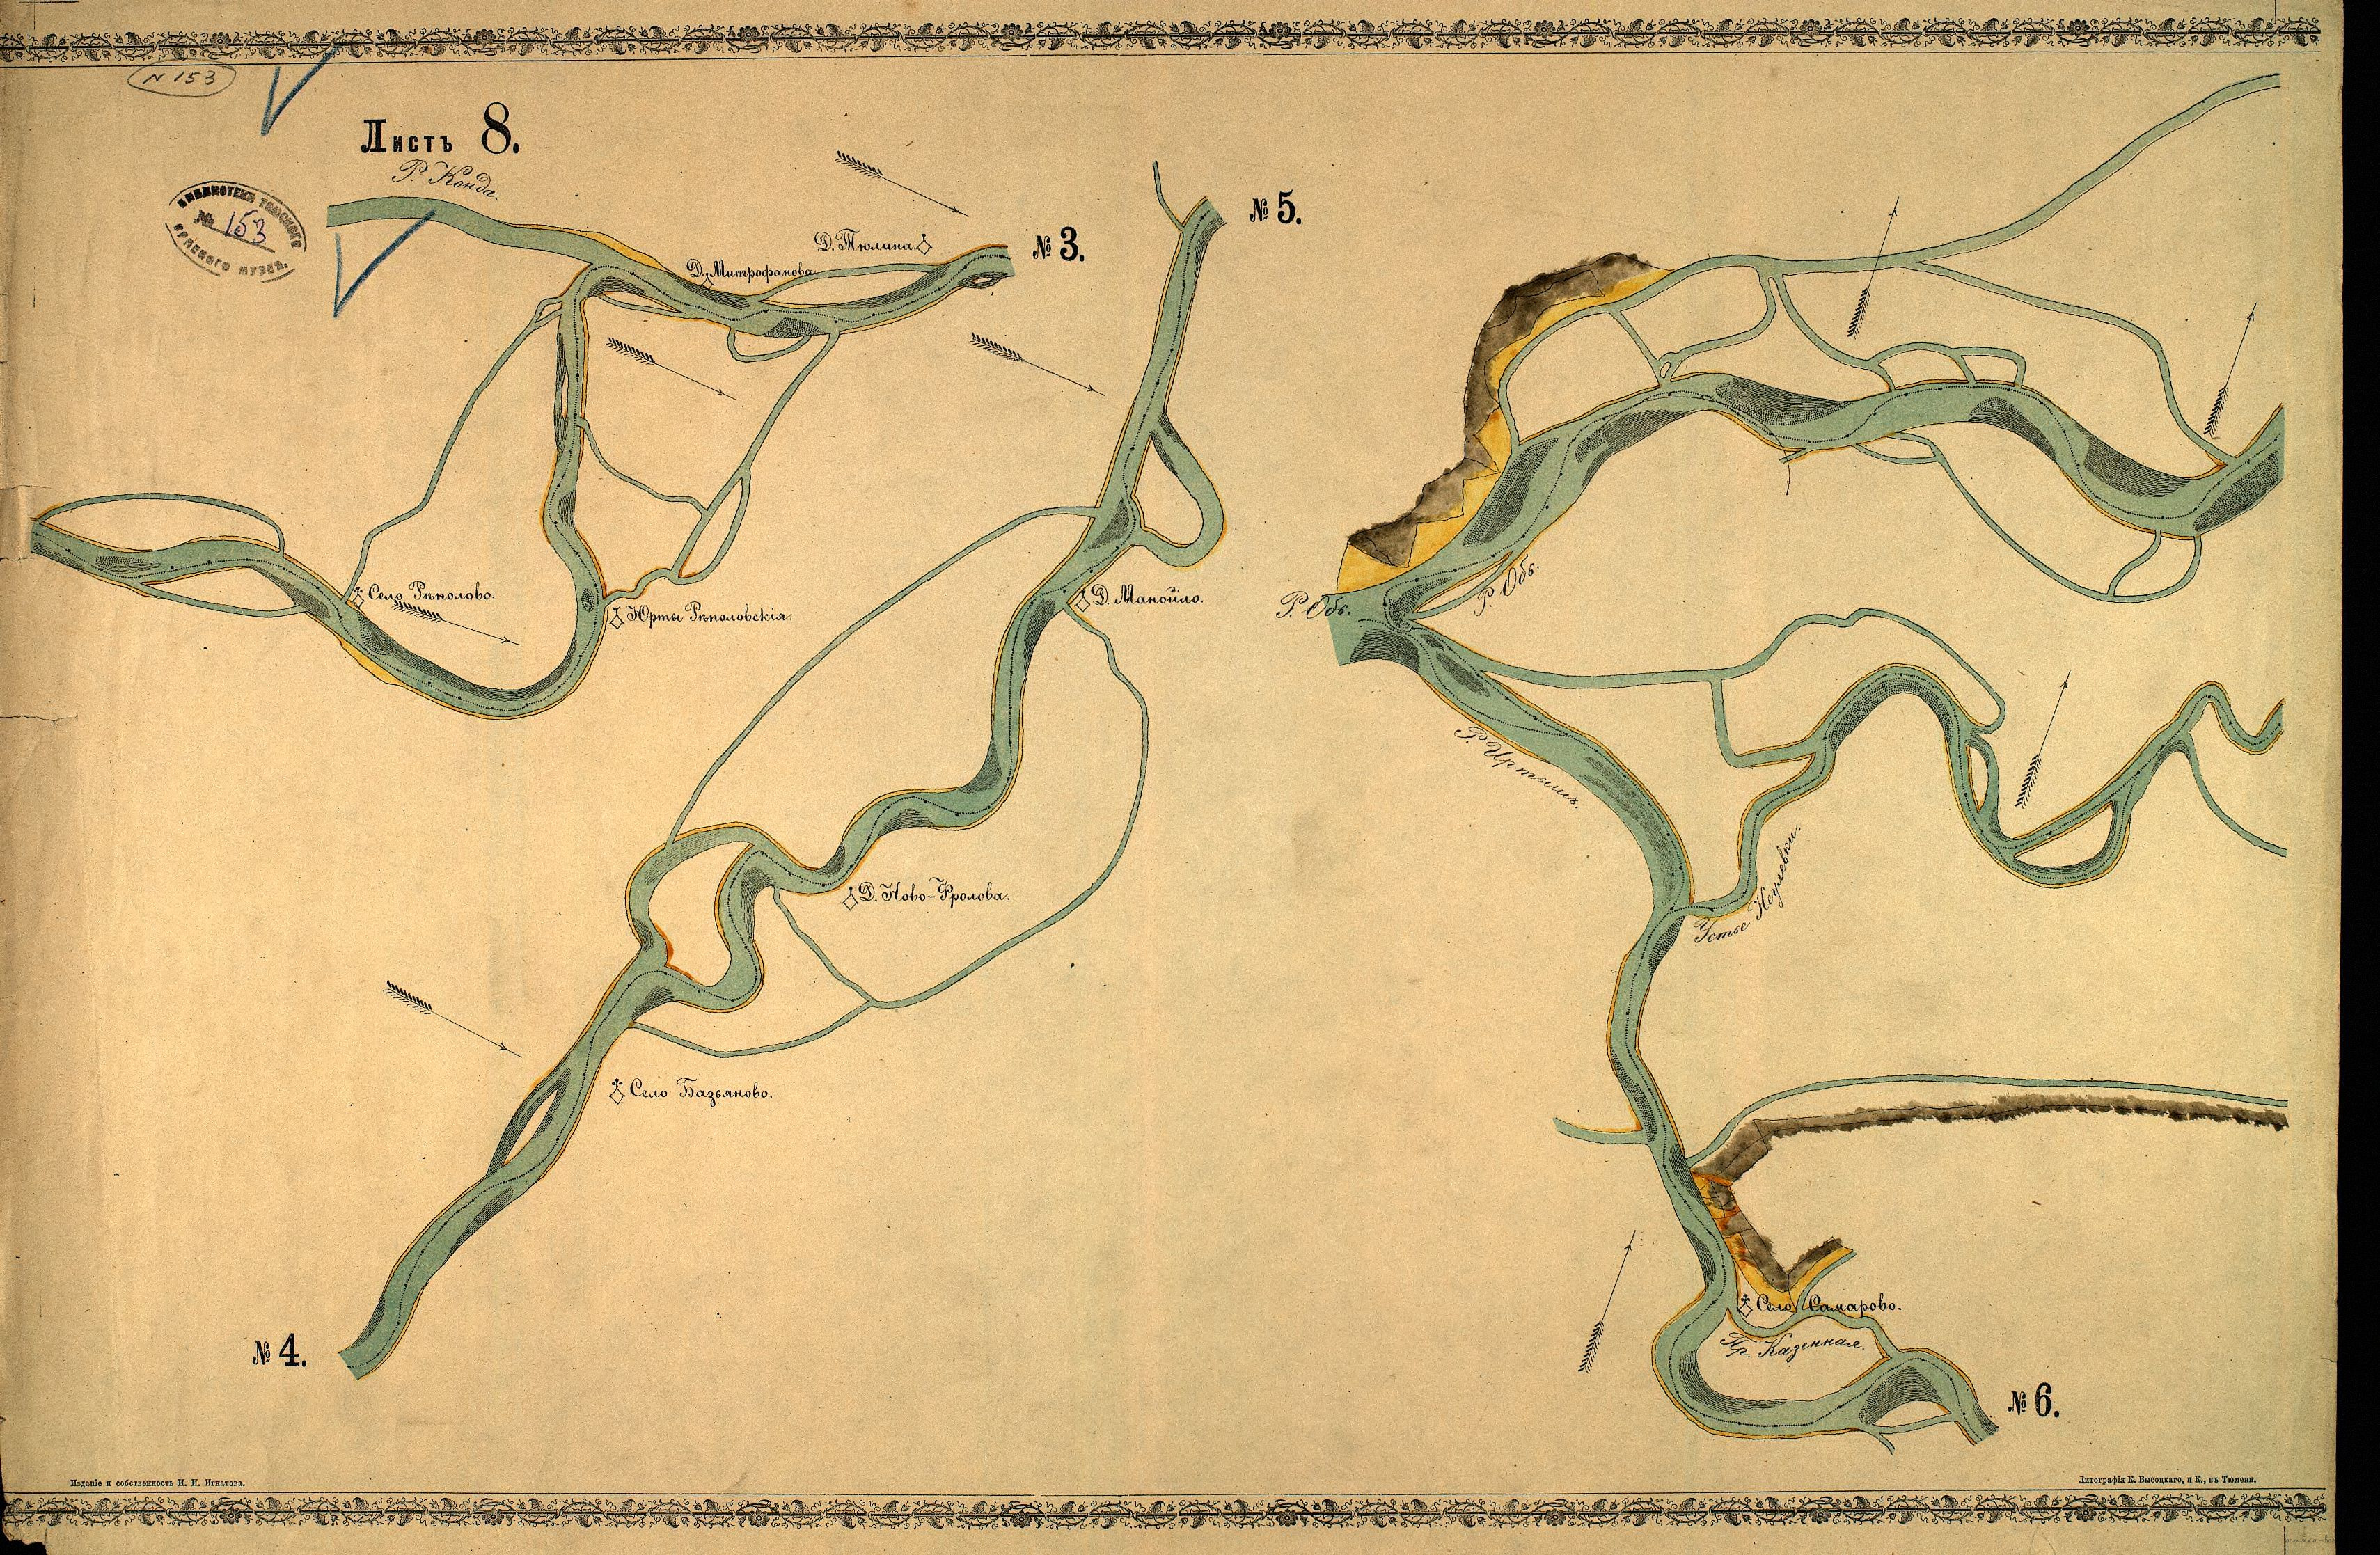 Река тобол начало и конец. Река Колва на карте. Река Тобол на карте. Карта Дорожник по рекам Западной Сибири. Древние карты реки Оби.